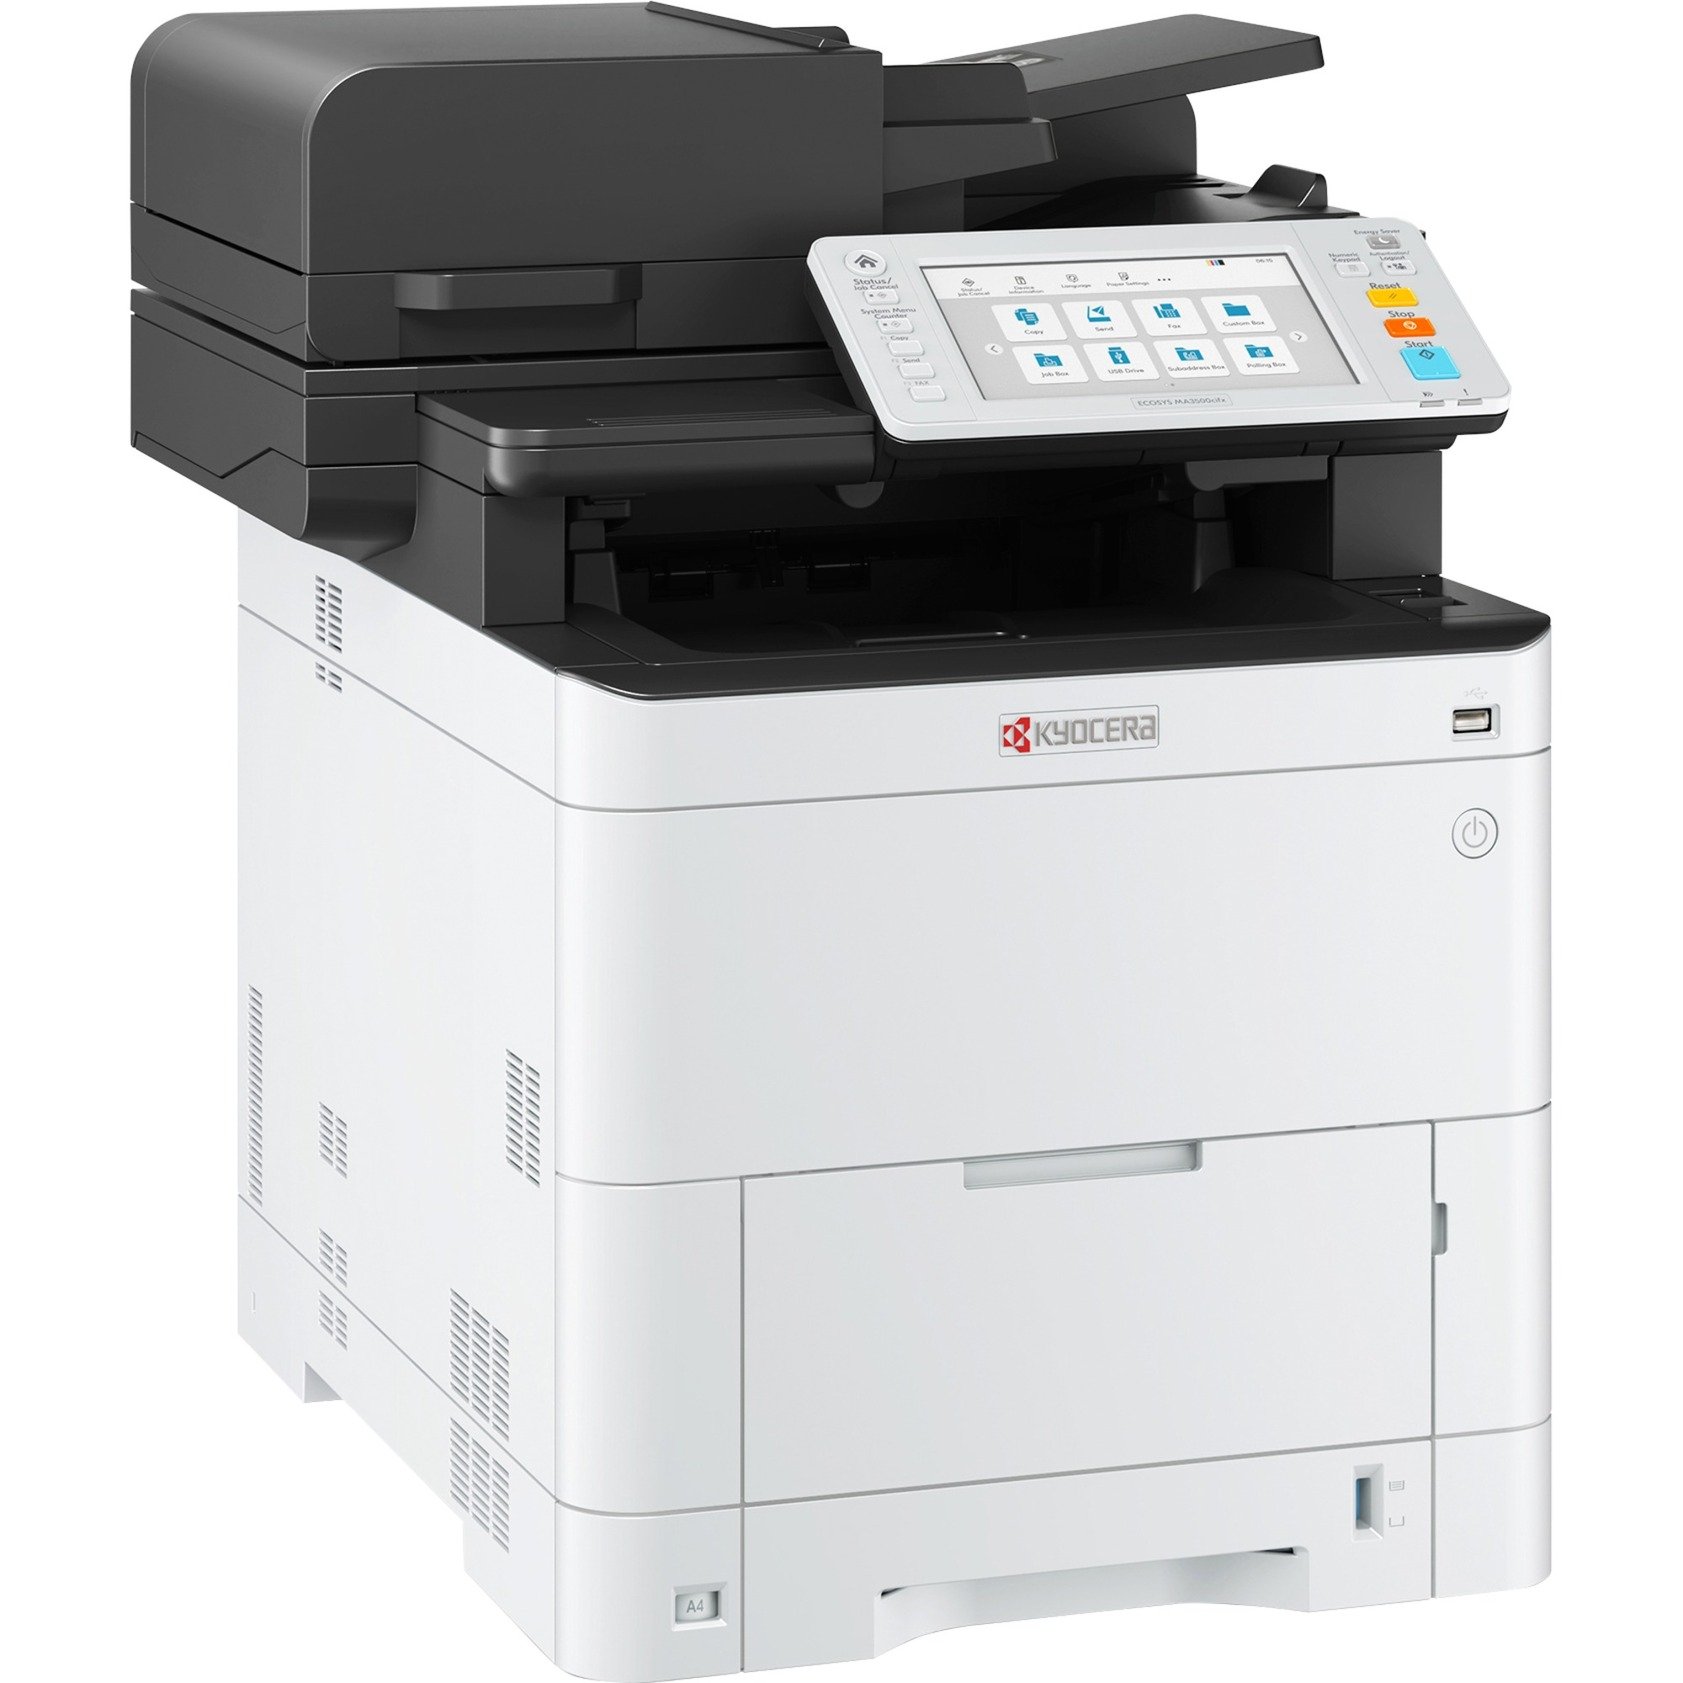 ECOSYS MA3500cifx, Multifunktionsdrucker von Kyocera